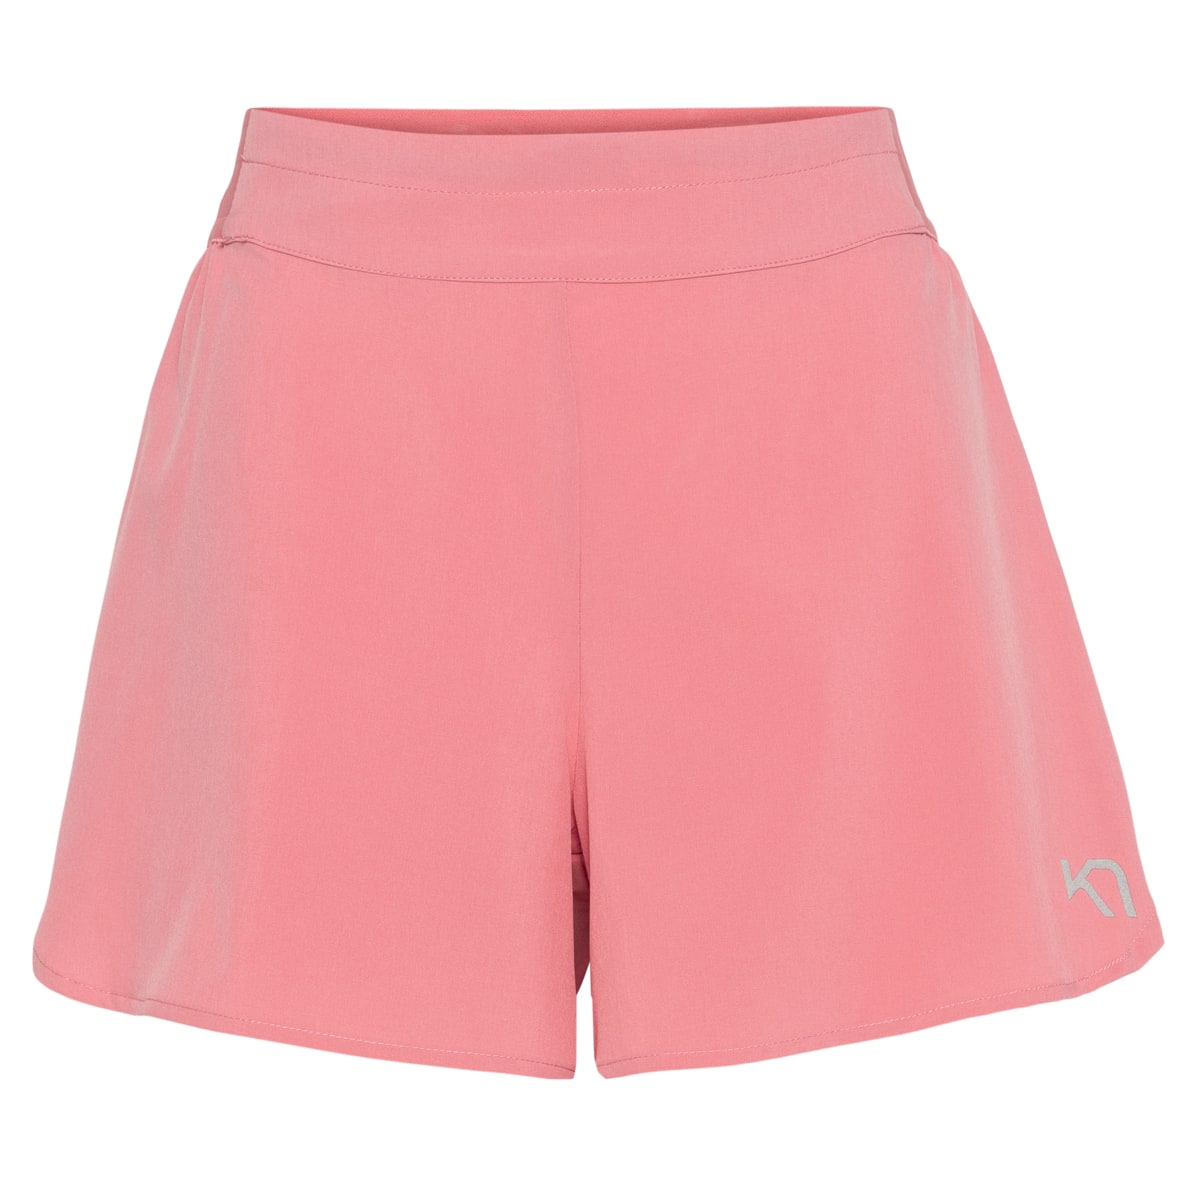 Kari Traa Women’s Nora 2.0 Shorts 4in Pastel Dusty Pink